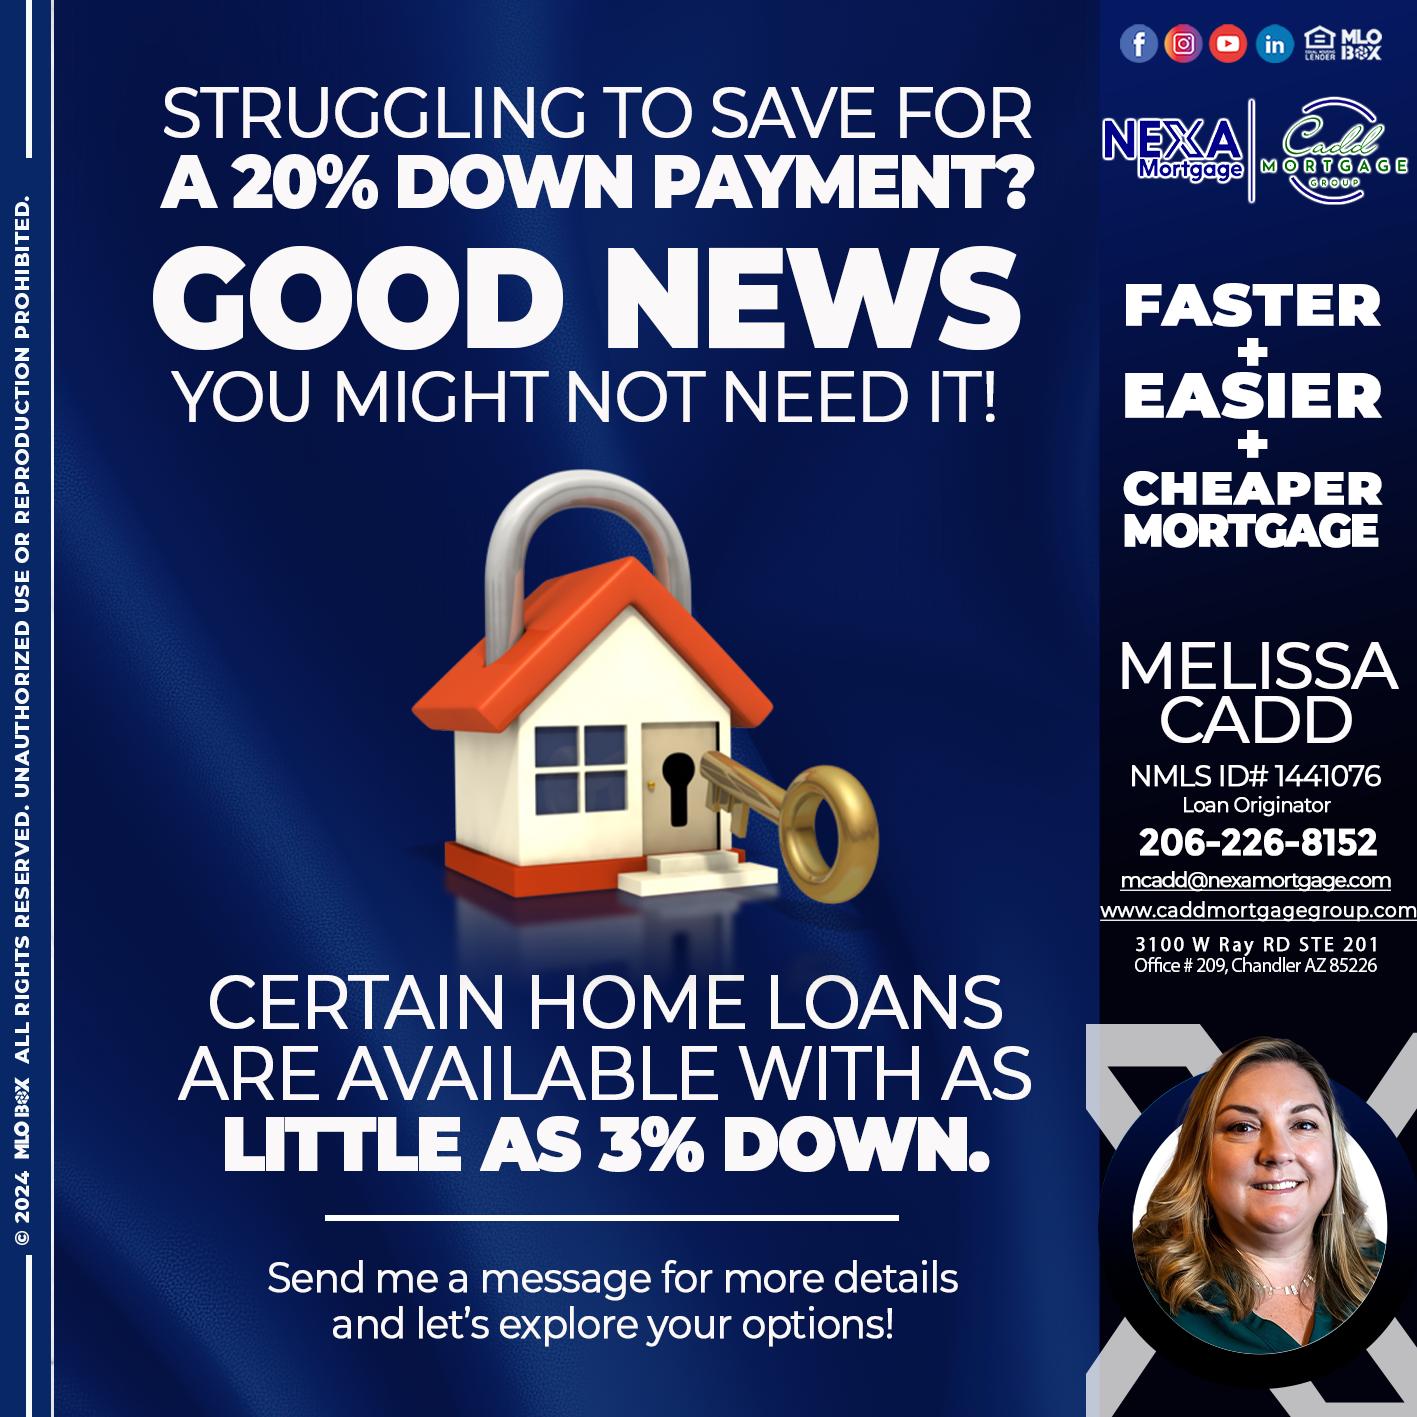 good news - Melissa Cadd -Loan Originator